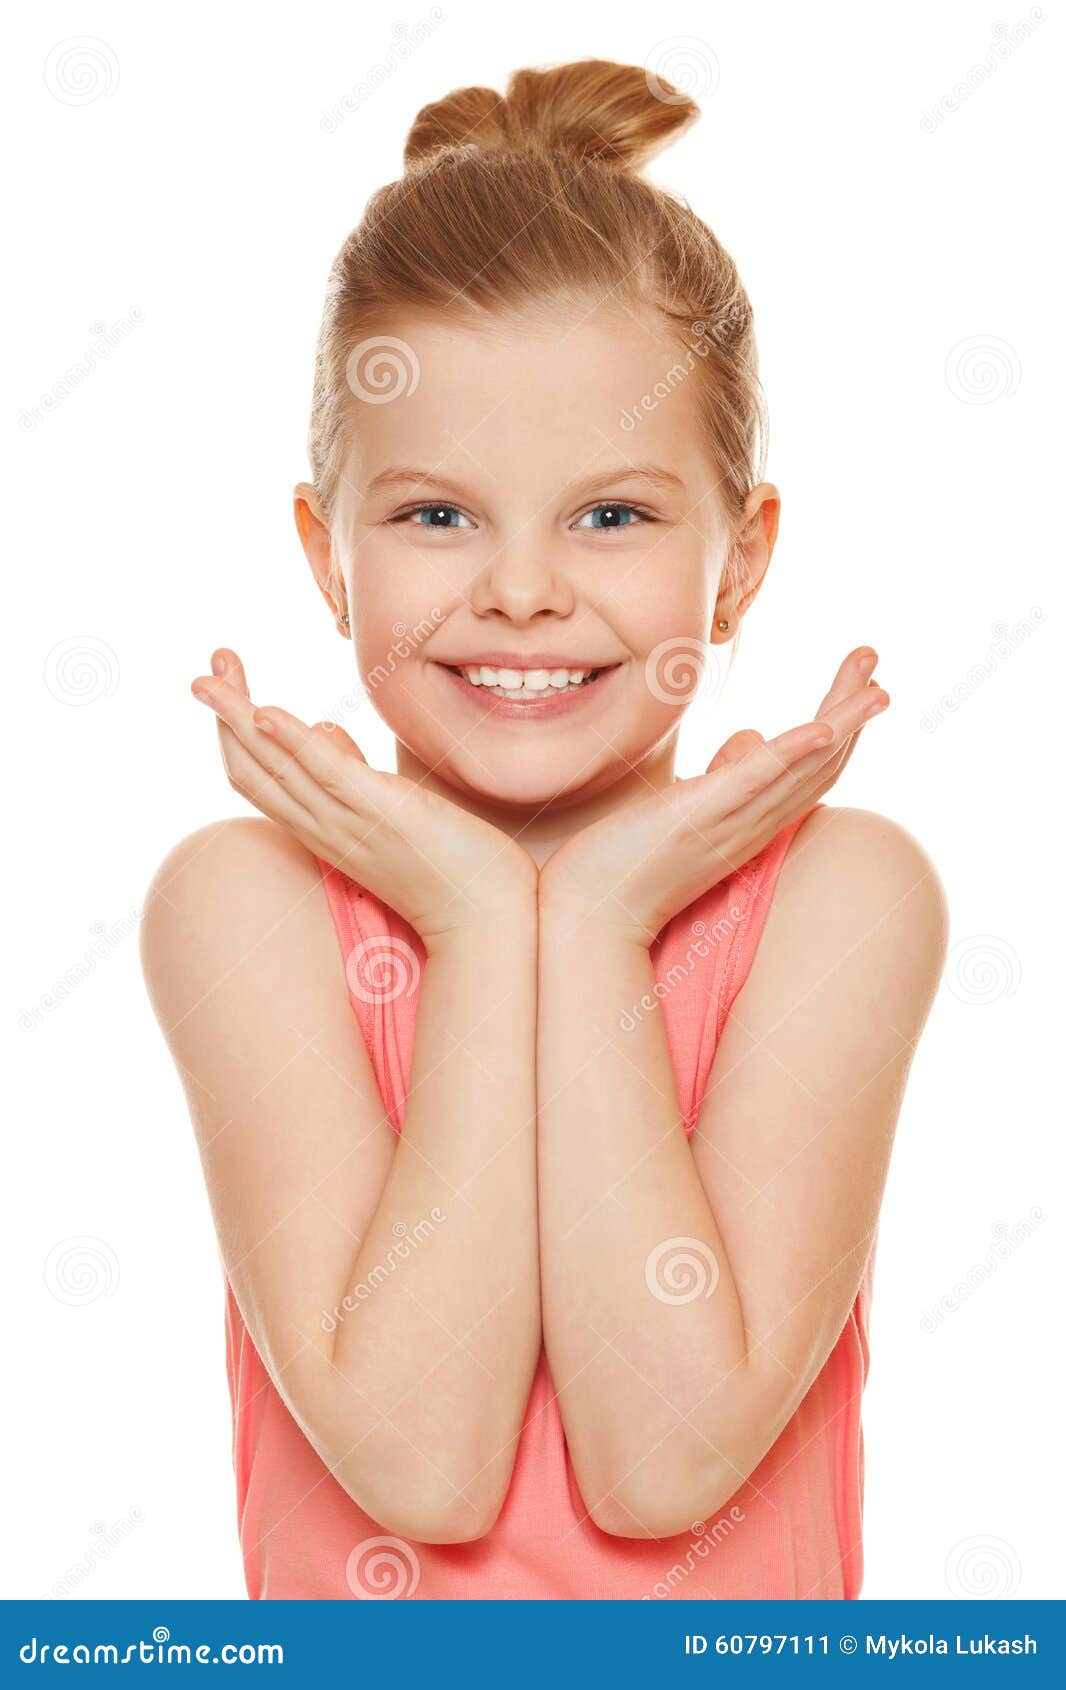 https://thumbs.dreamstime.com/z/happy-joyful-little-girl-smiling-hands-near-face-isolated-white-background-60797111.jpg